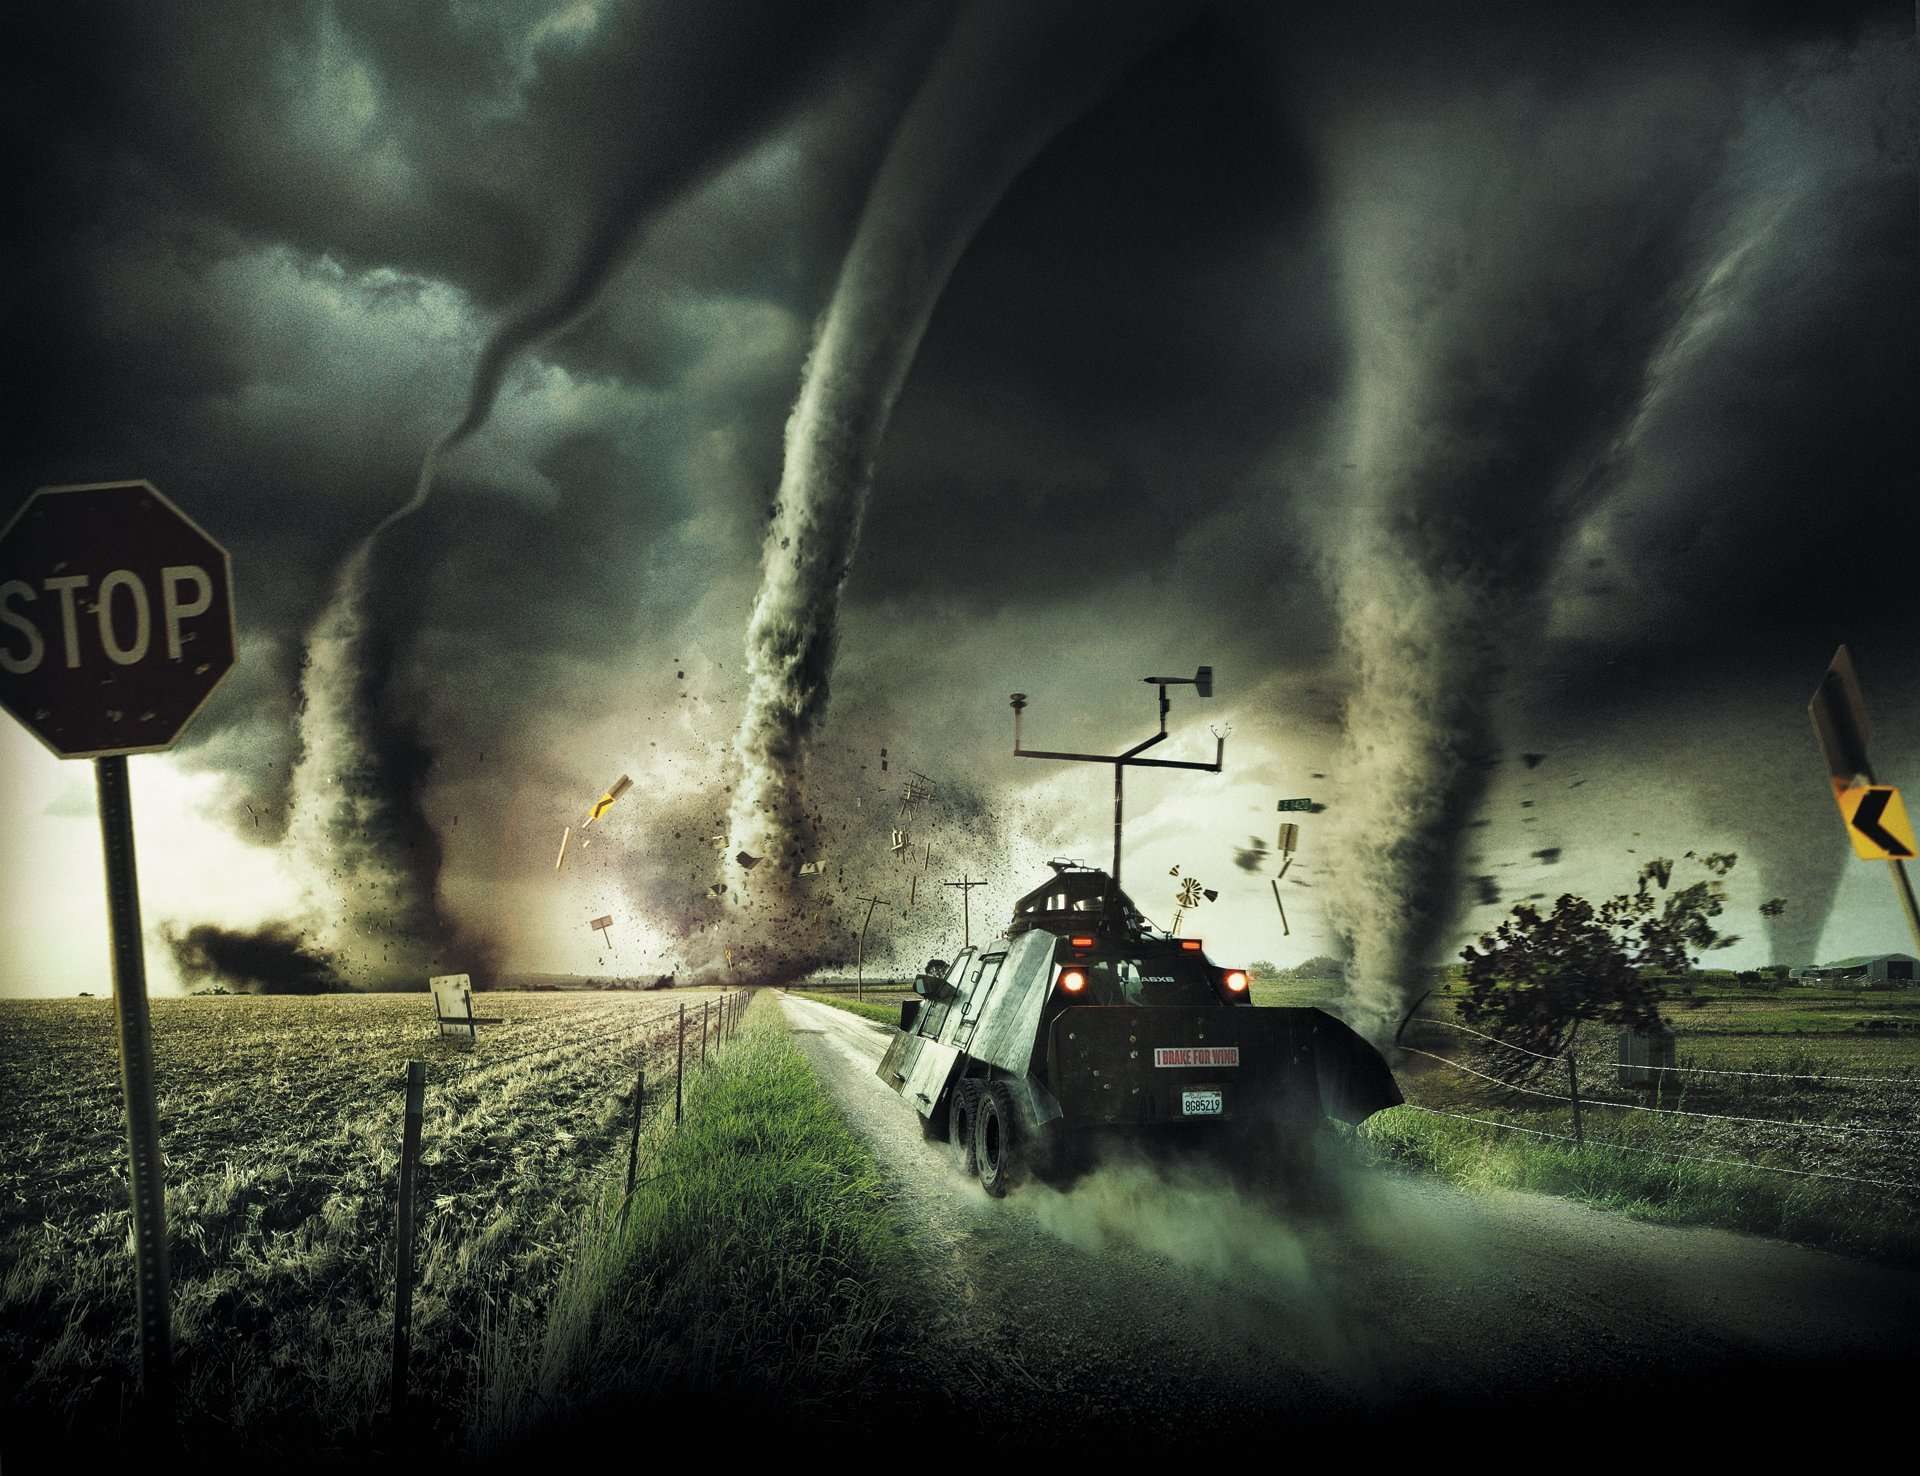 wallpaper-tornado-hunter-fantasy-weather-Download.jpg